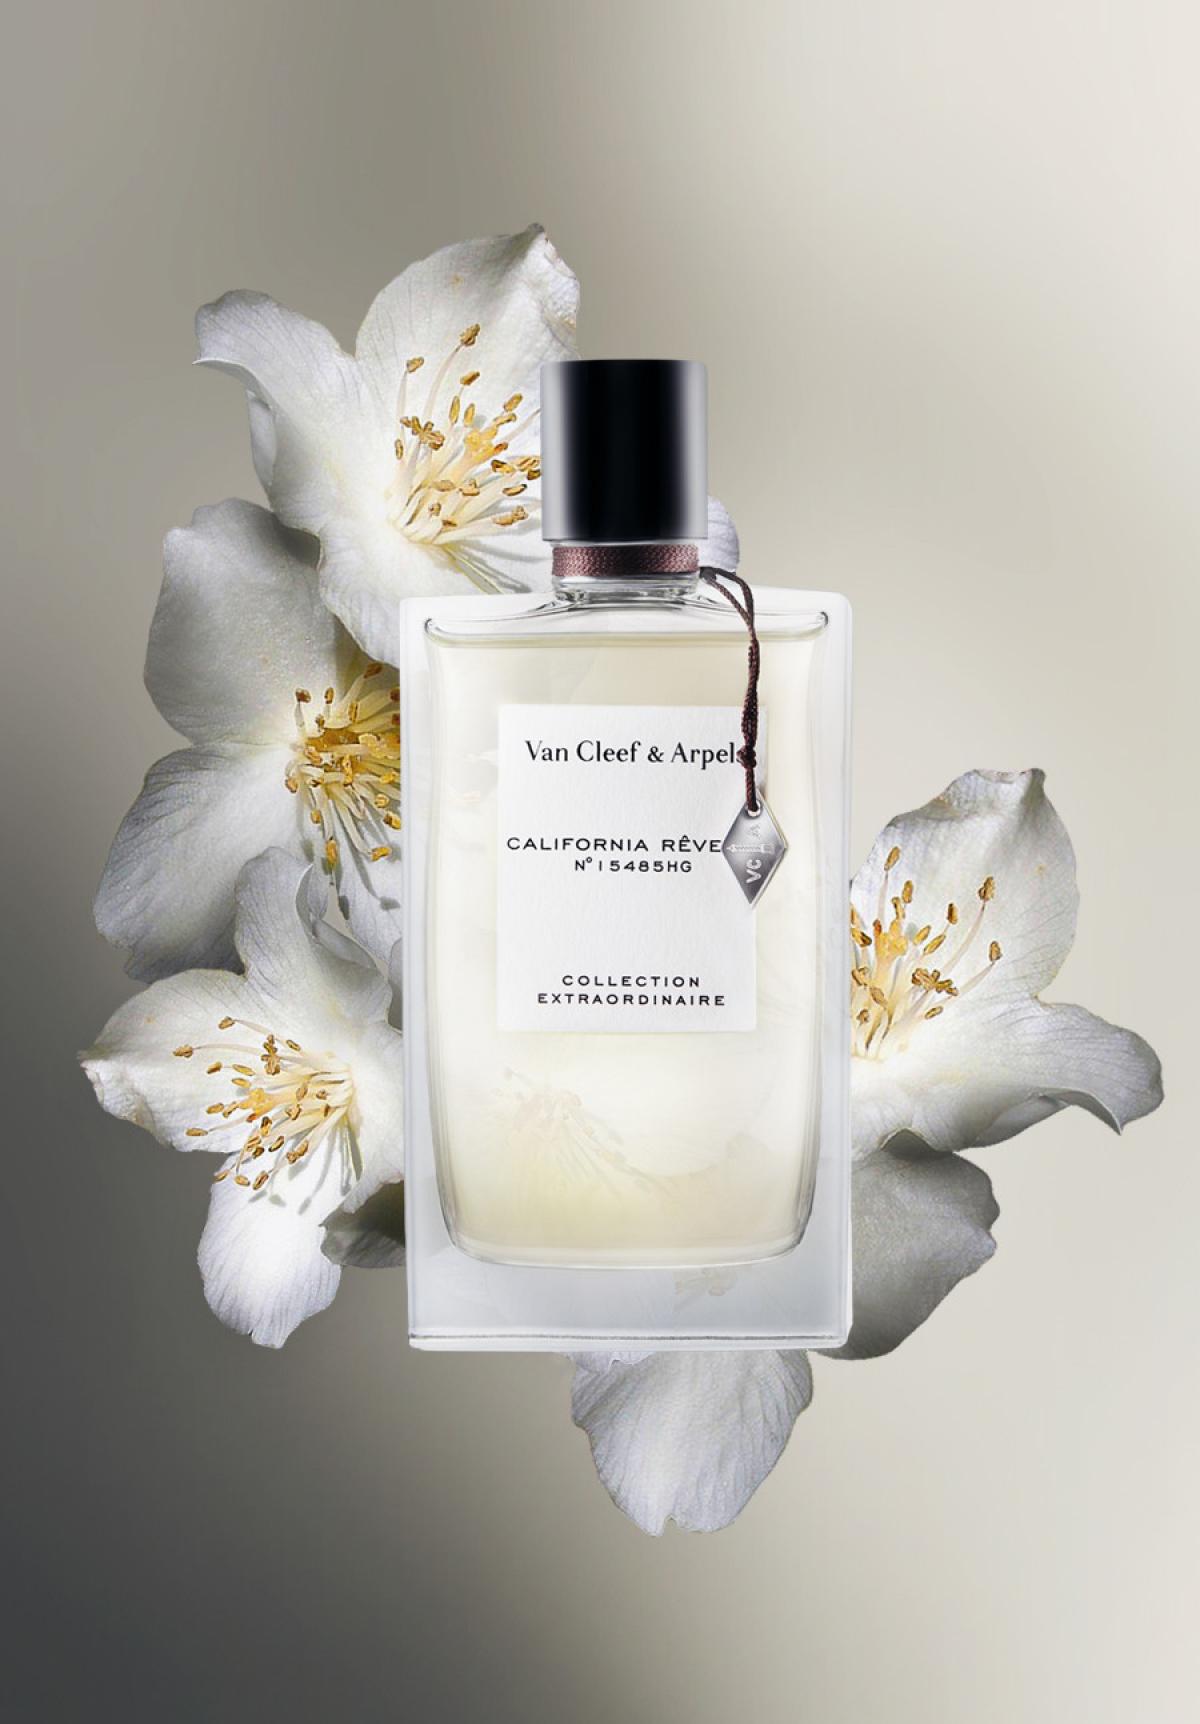 Collection Extraordinaire California Reverie Van Cleef & Arpels perfume ...